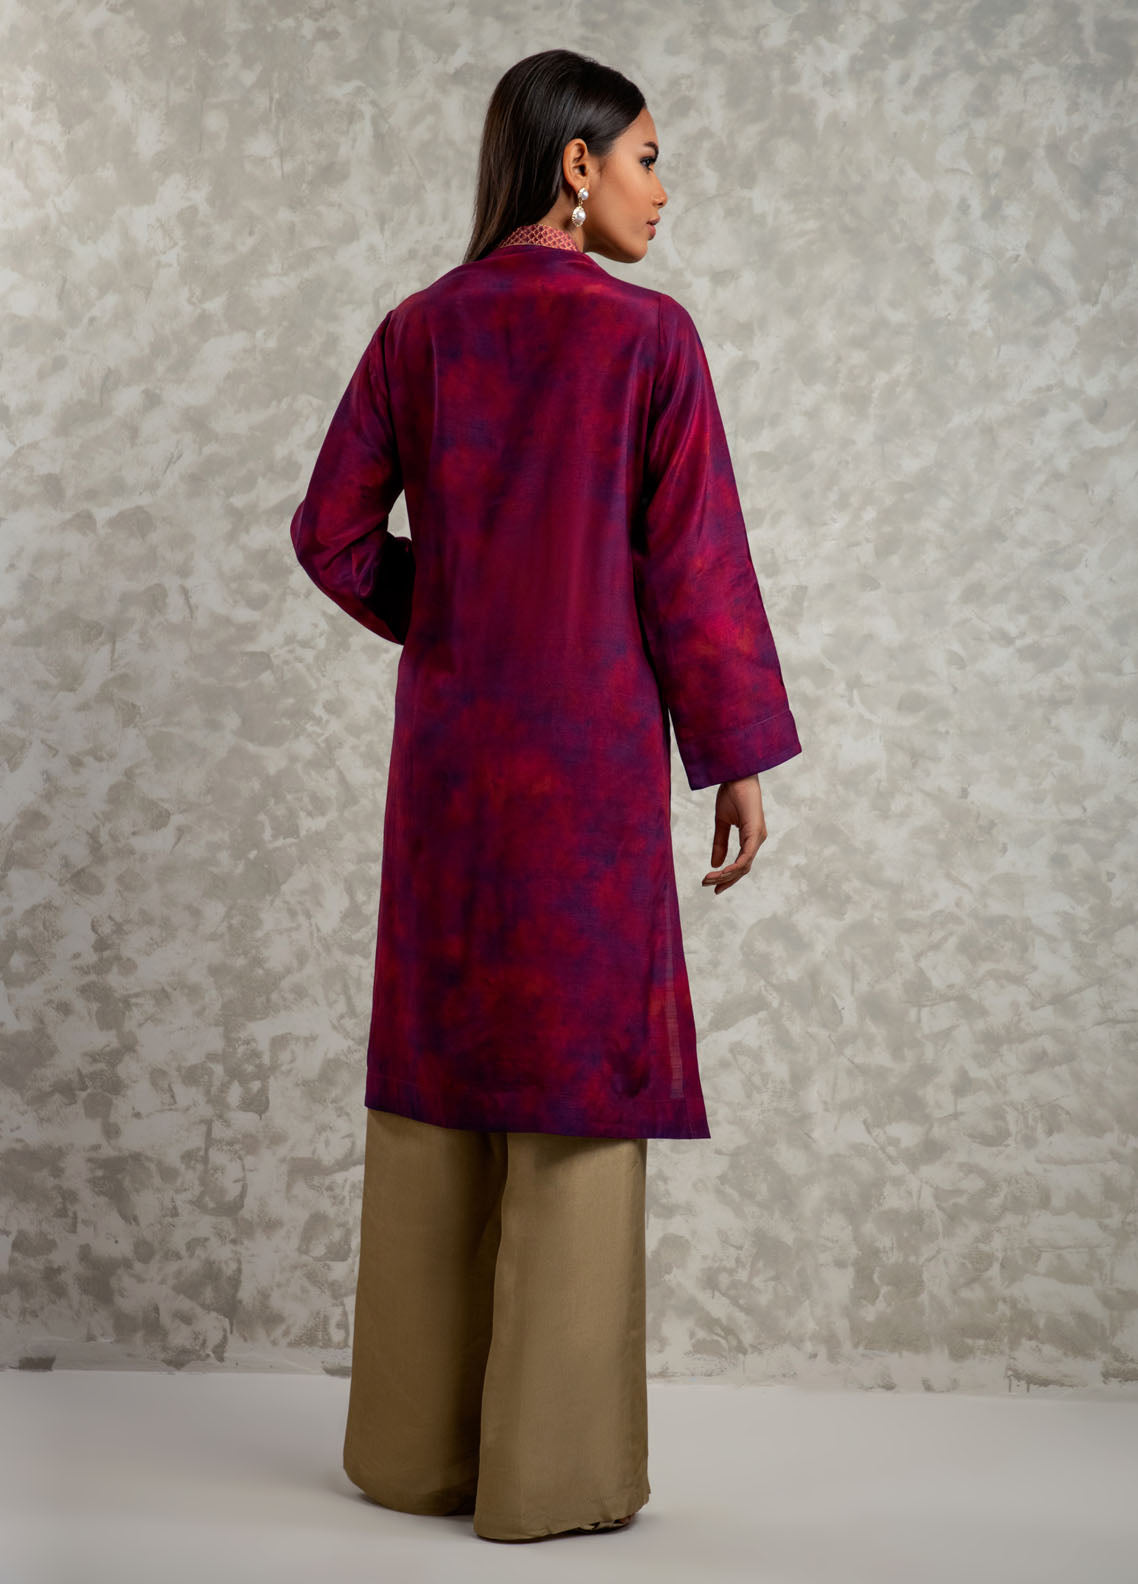 Shamaeel Ansari Luxury Pret Embroidered Silk Shirt AM-12